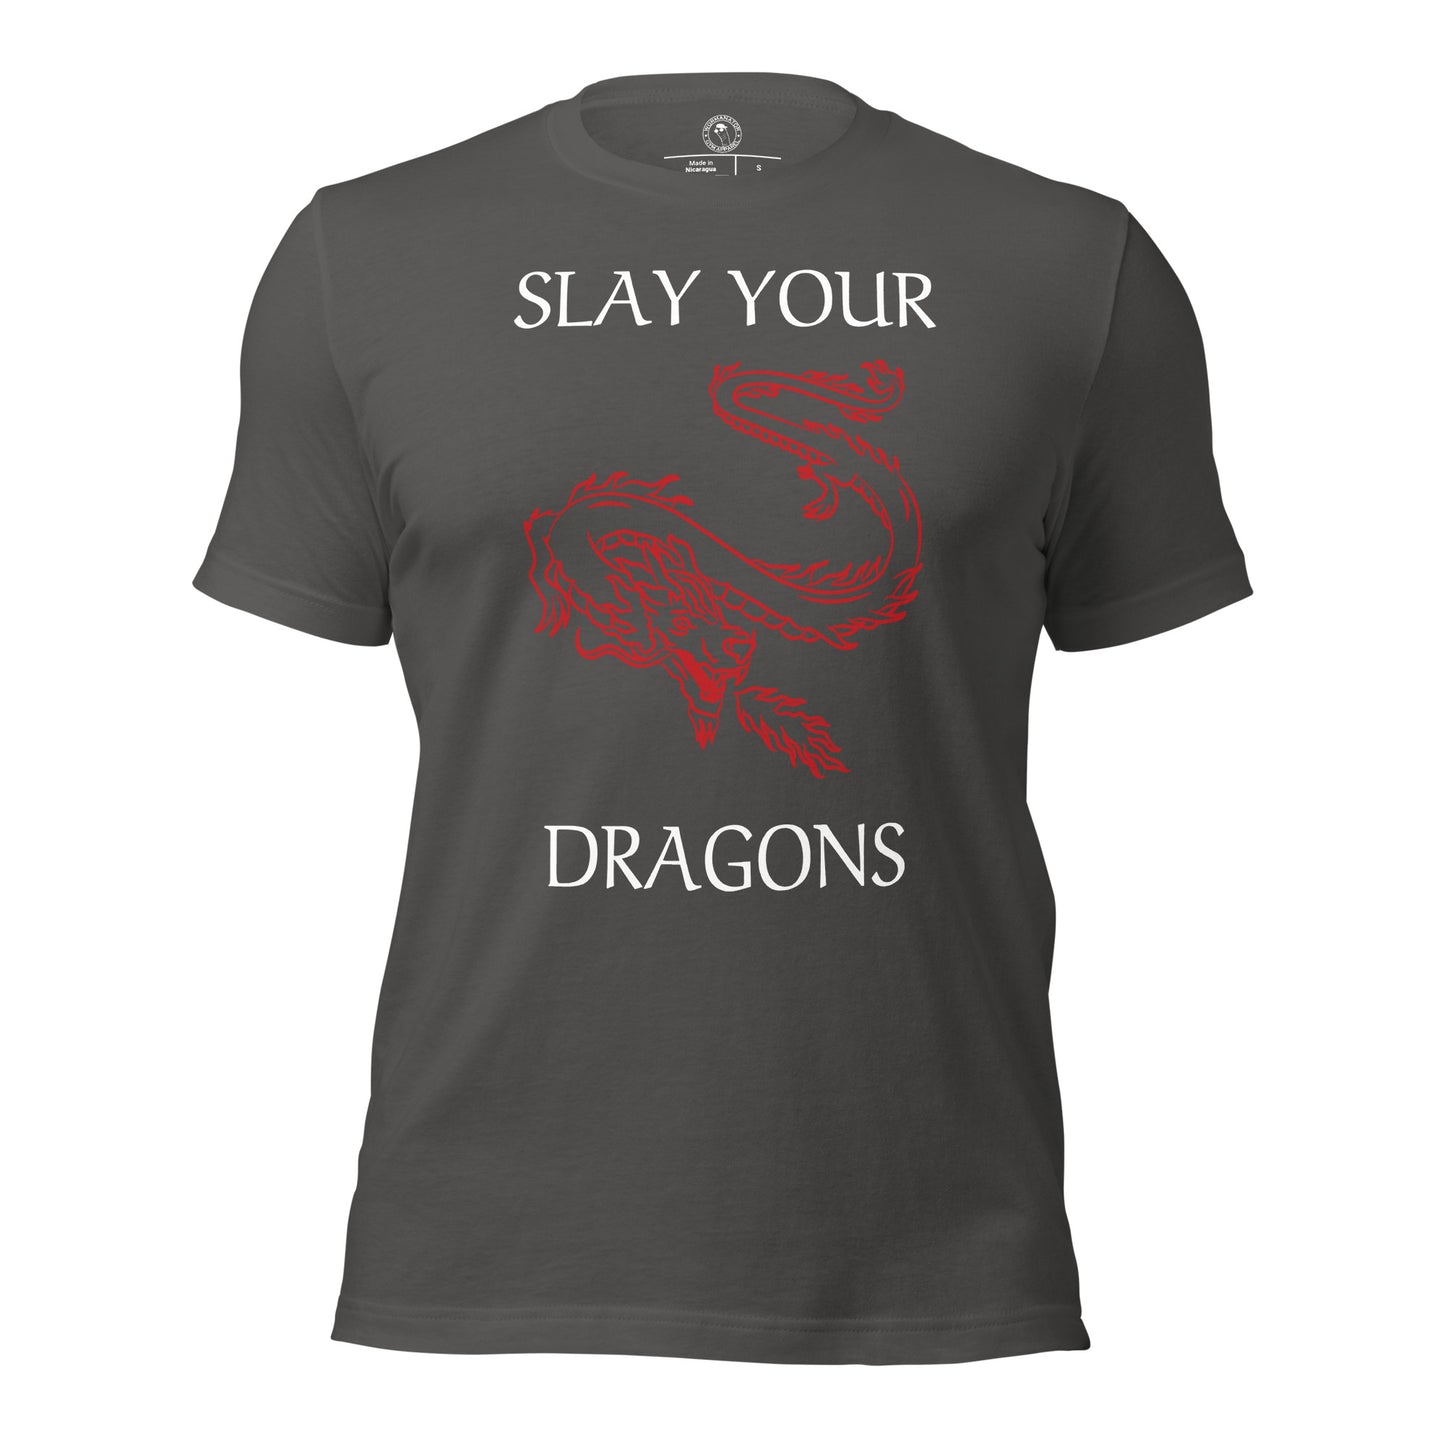 Slay Your Dragons Shirt in Asphalt